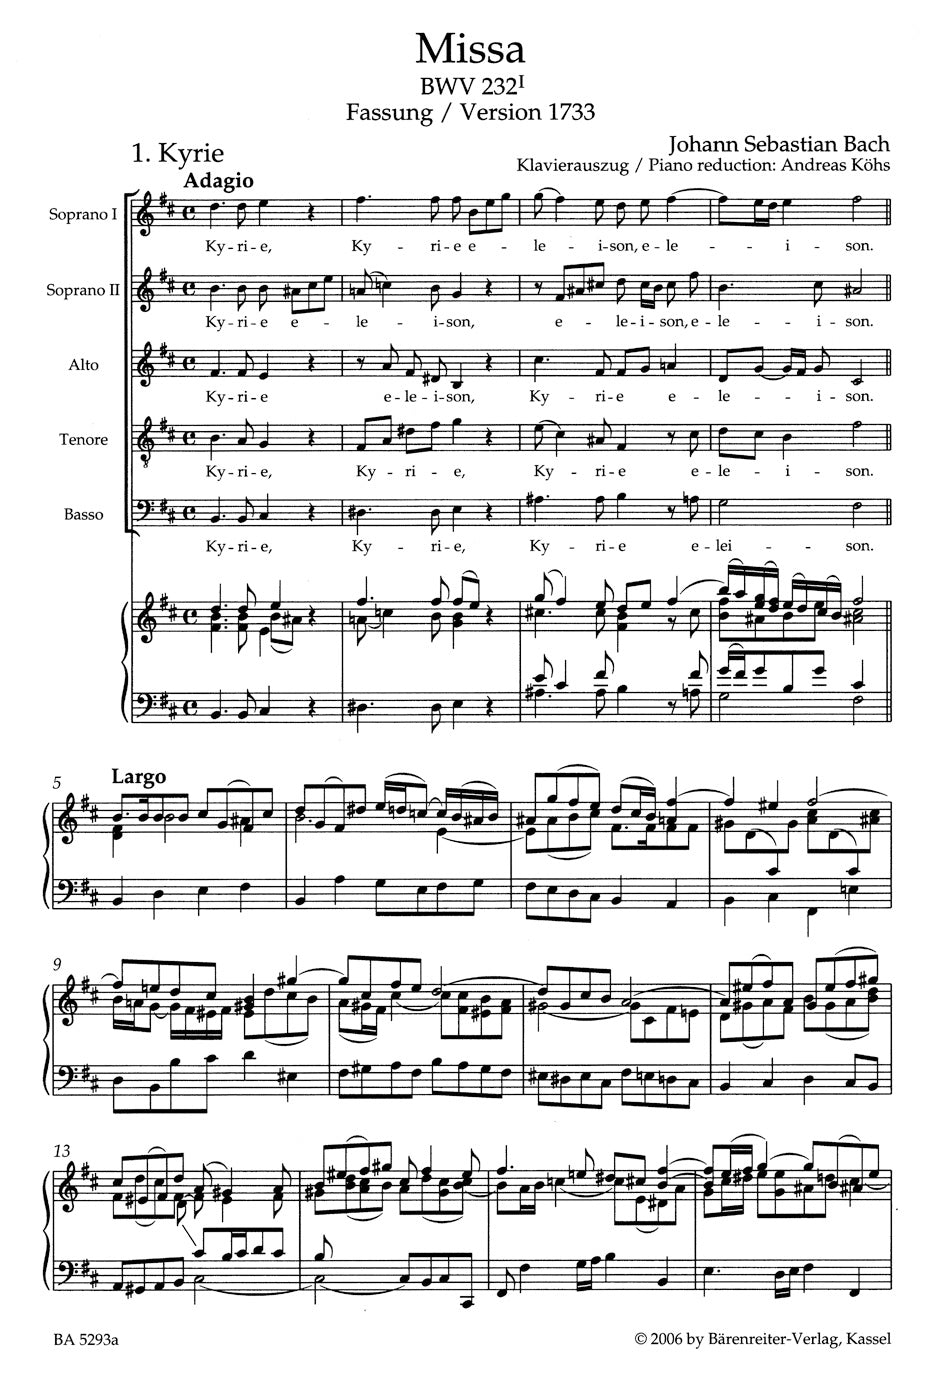 Bach Early Versions of the Mass B minor BWV 232